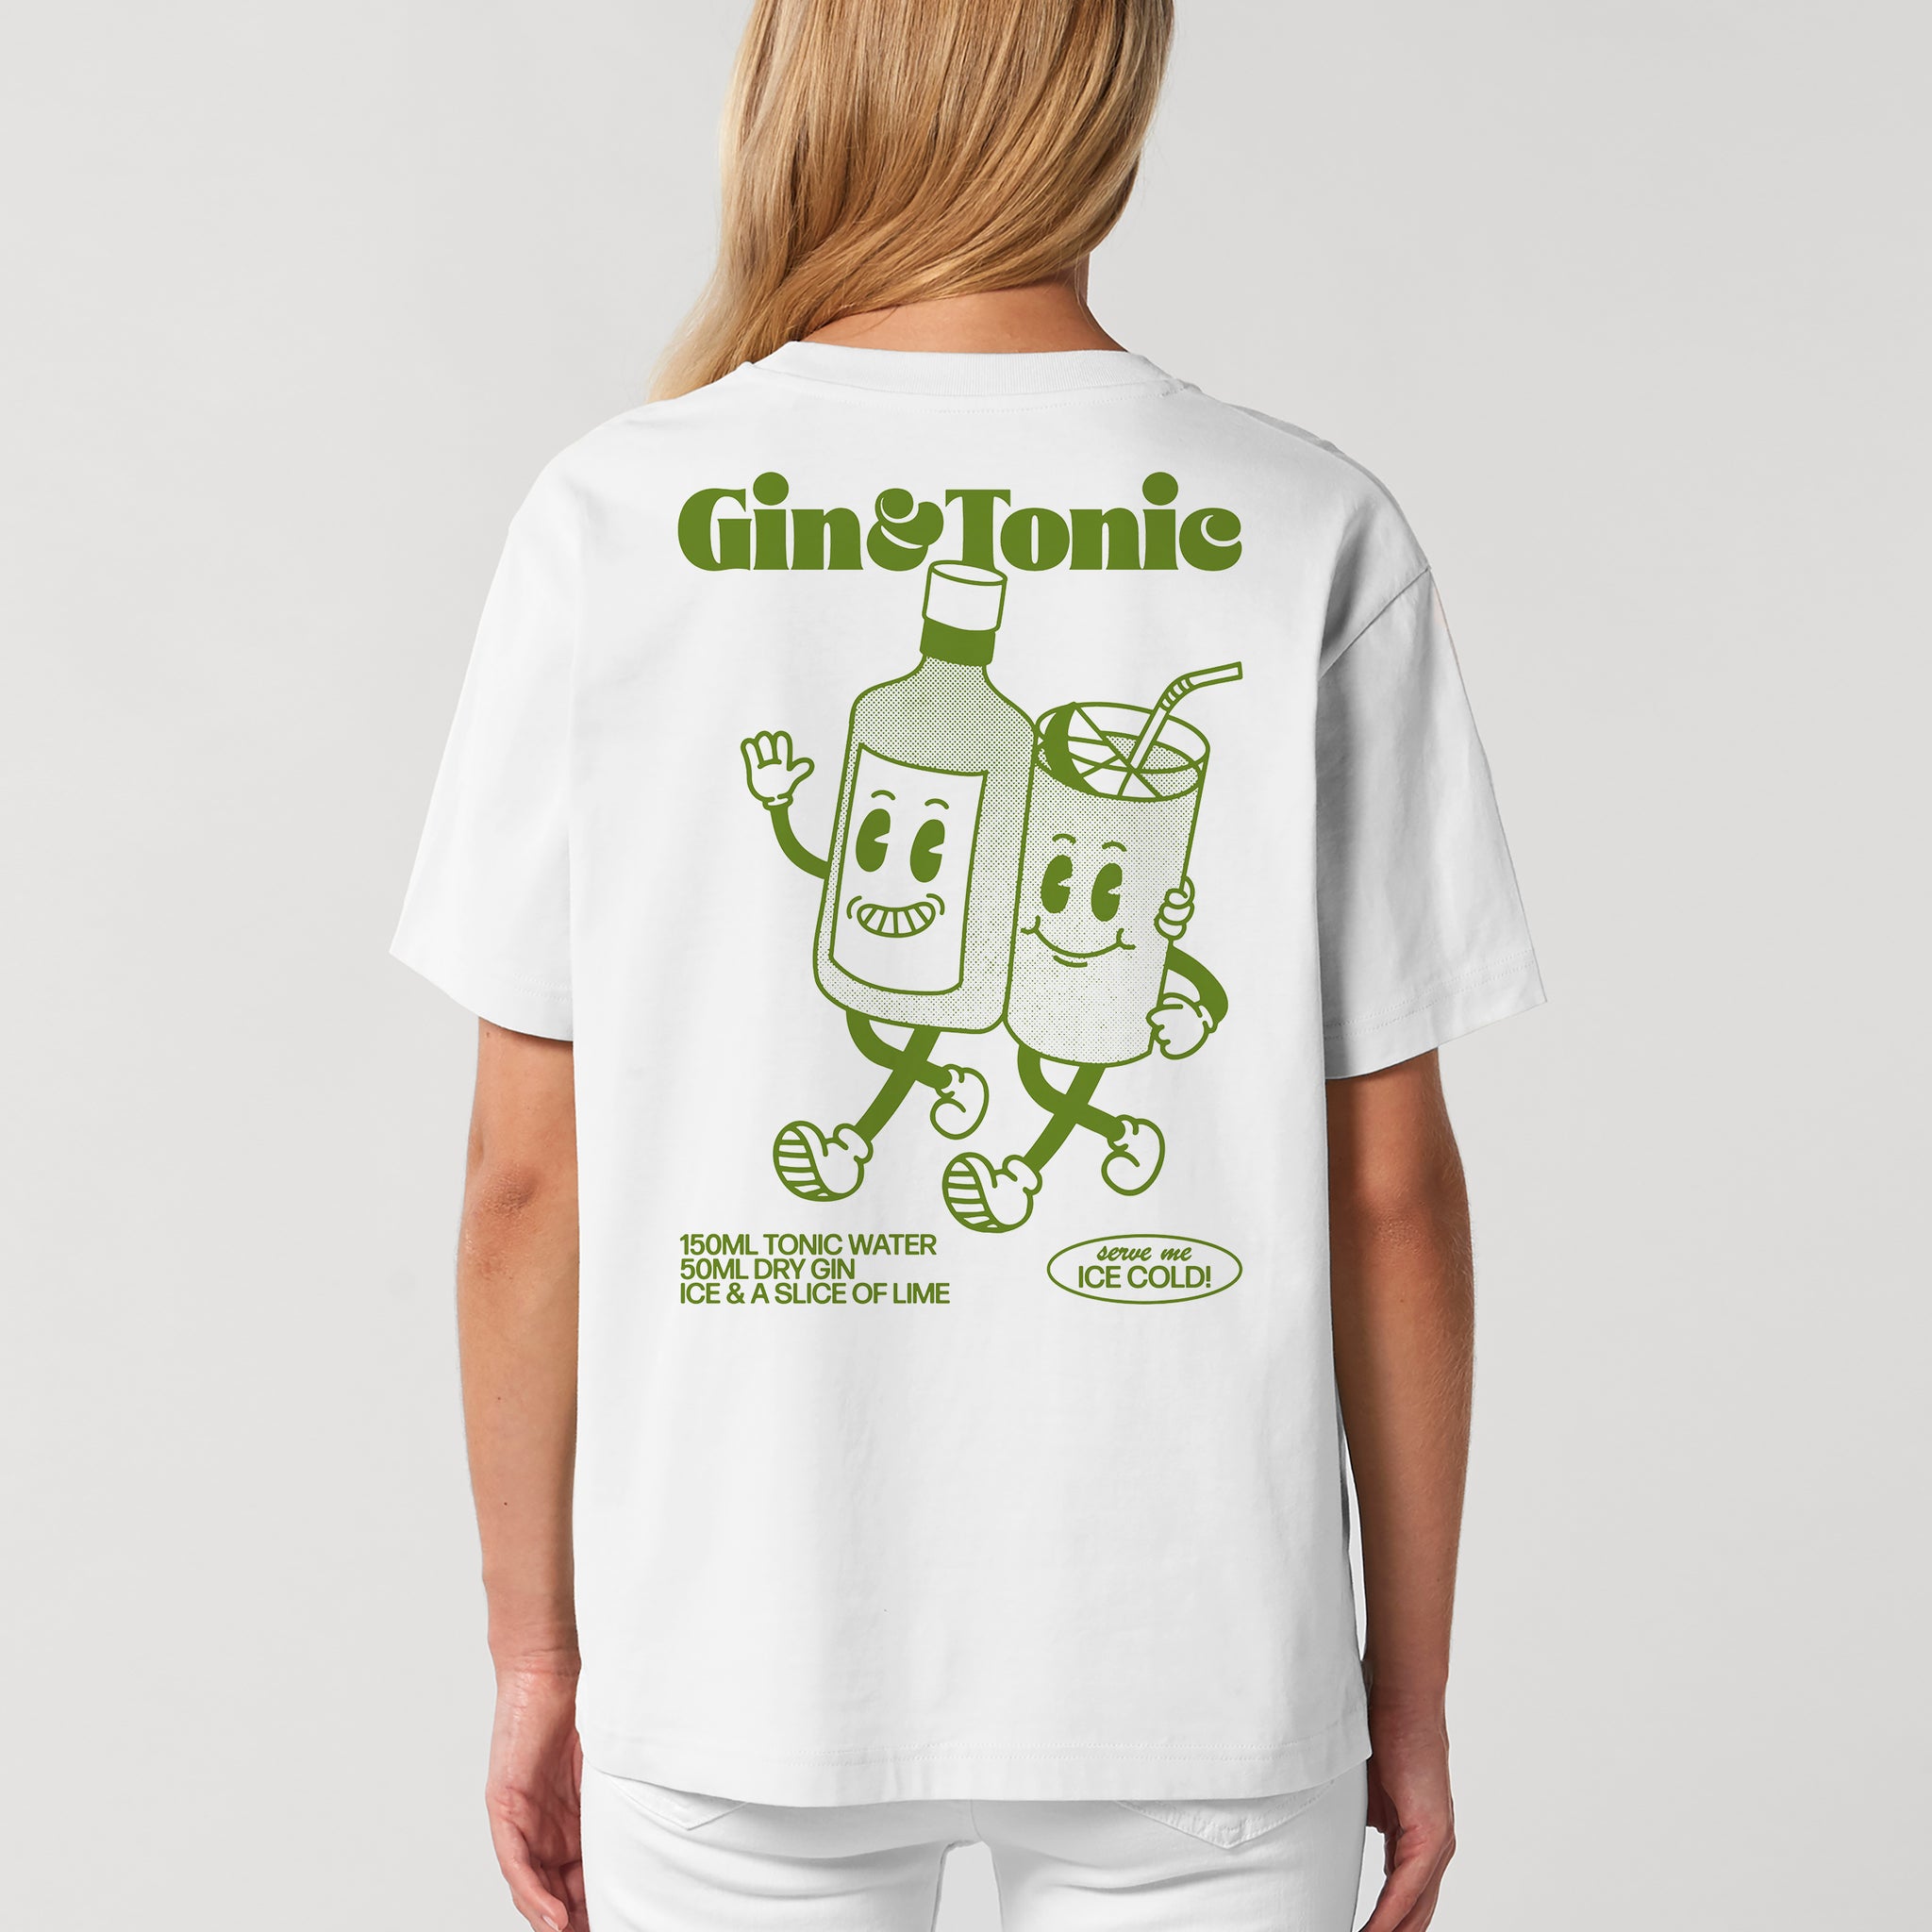 'Gin & Tonic' Short Sleeve Organic Cotton T-shirt